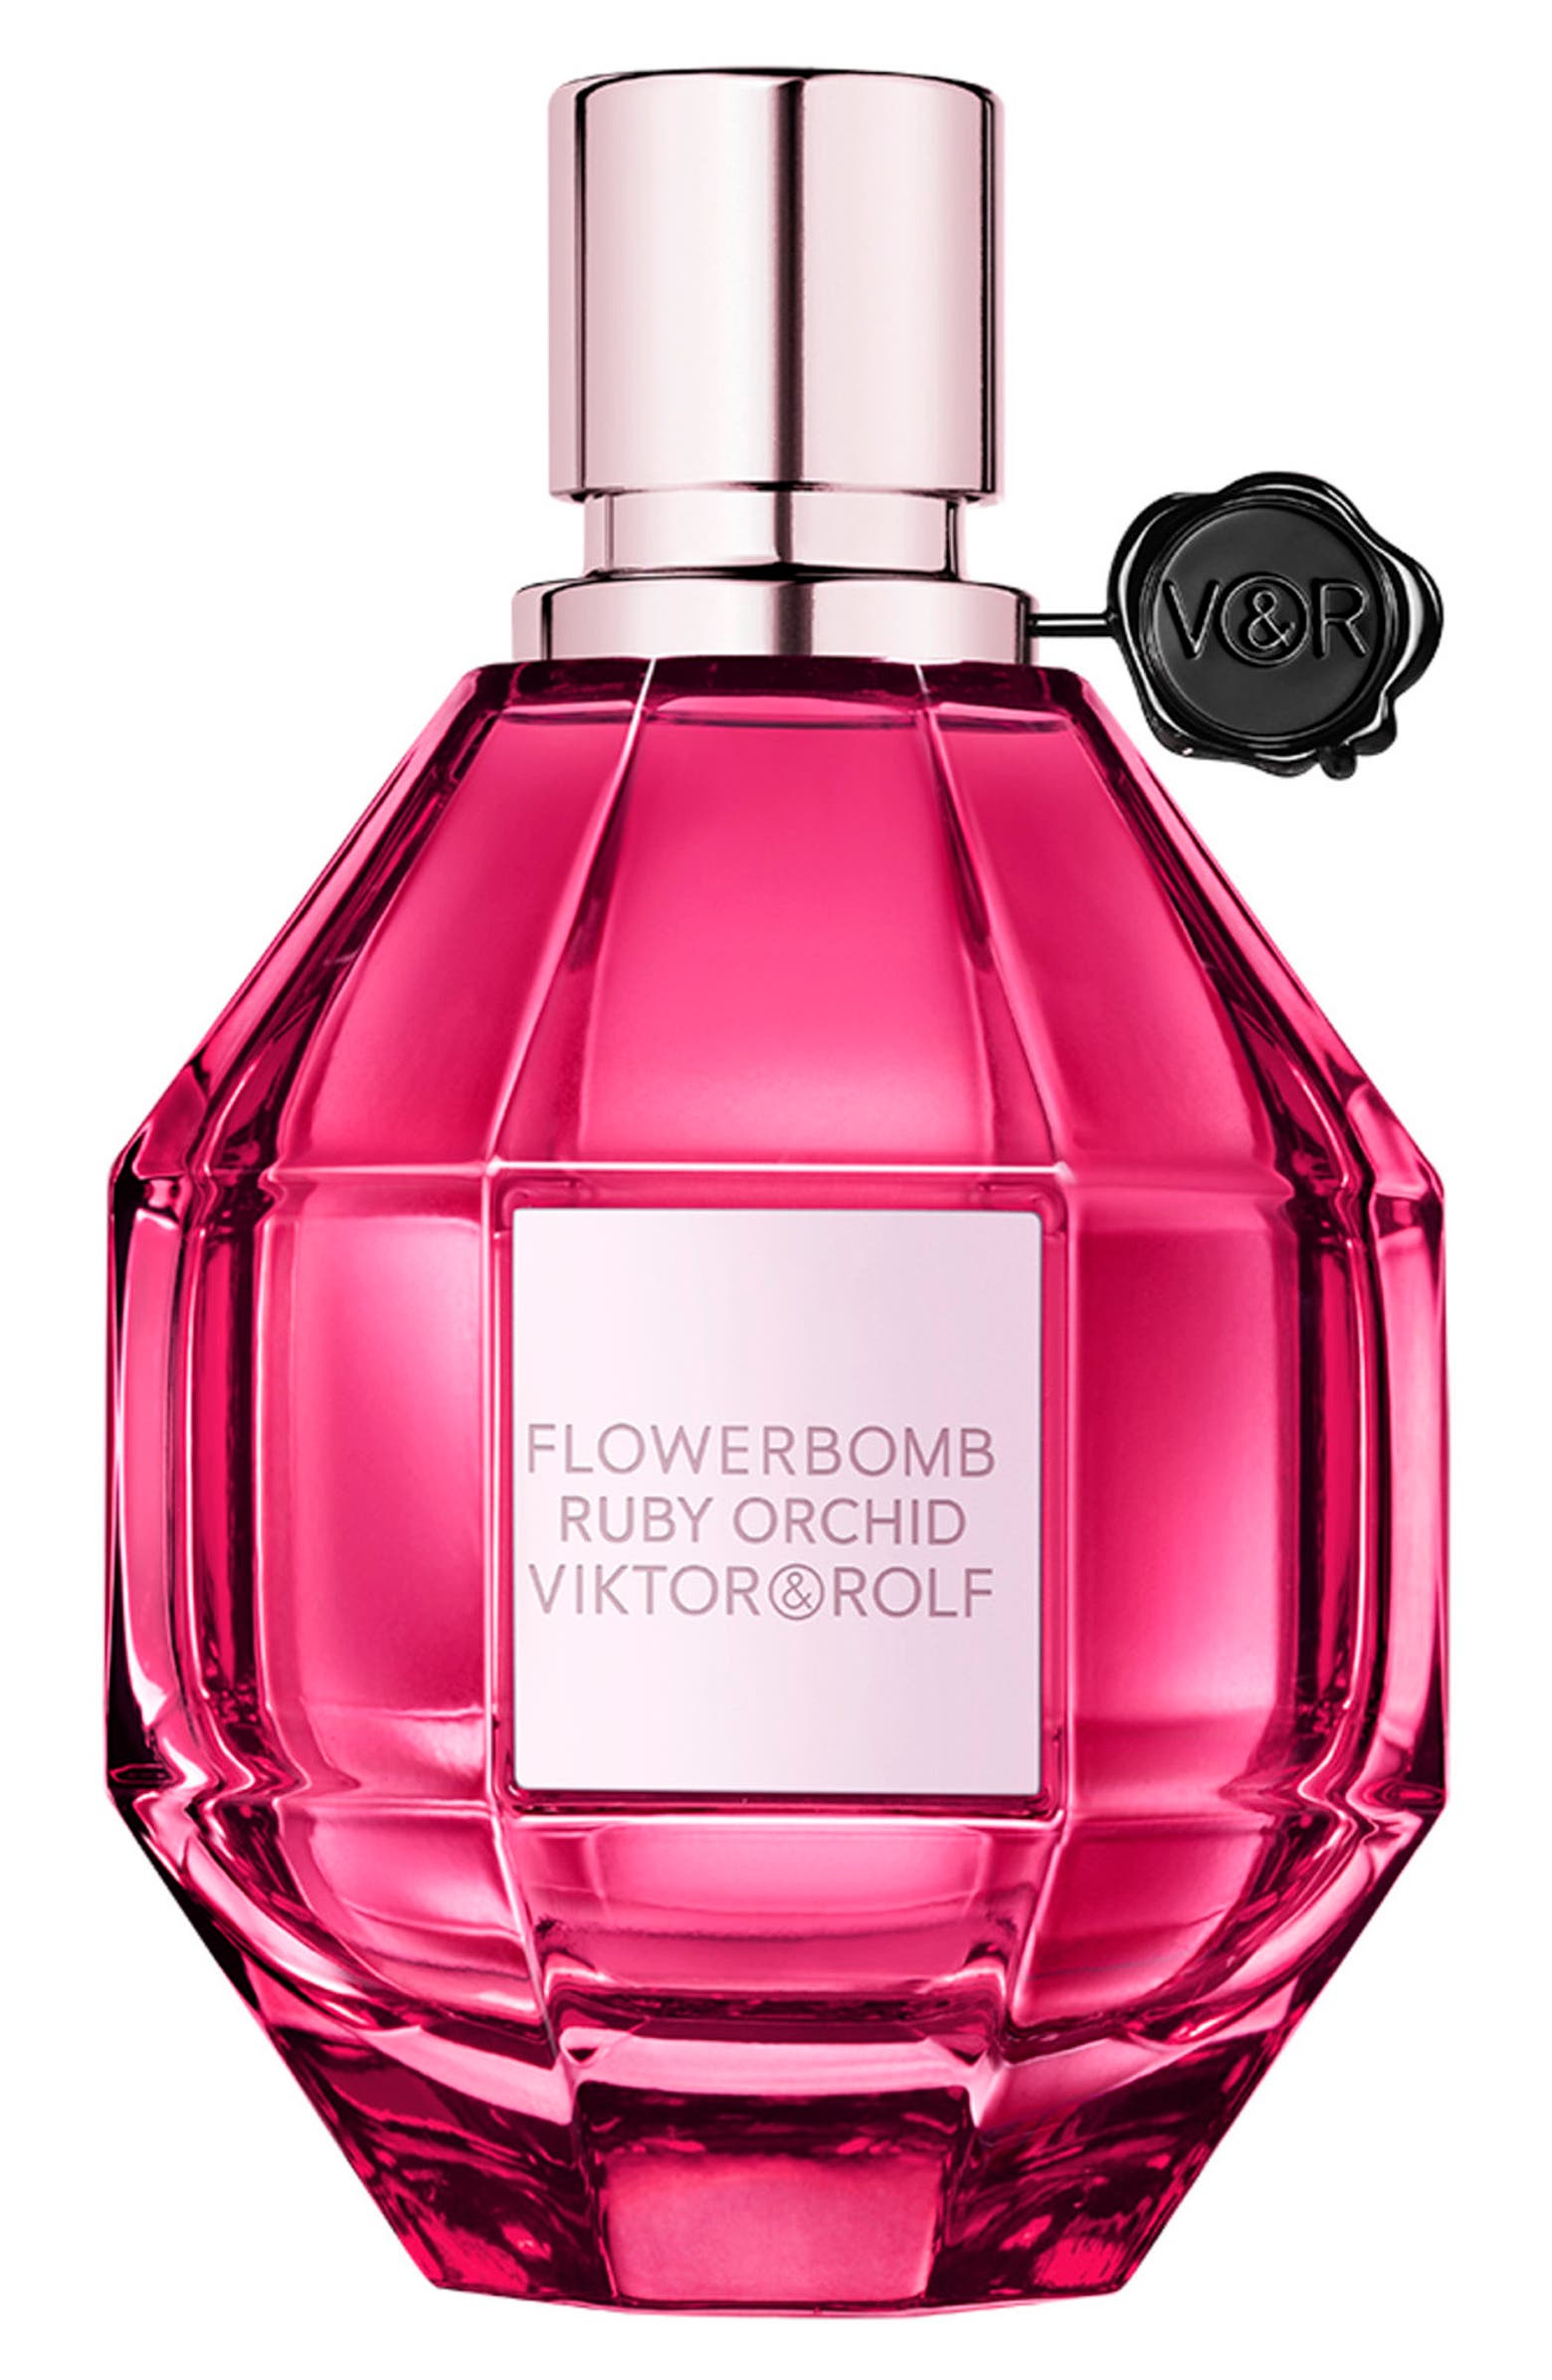 Viktor&Rolf Flowerbomb Ruby Orchid Eau de Parfum